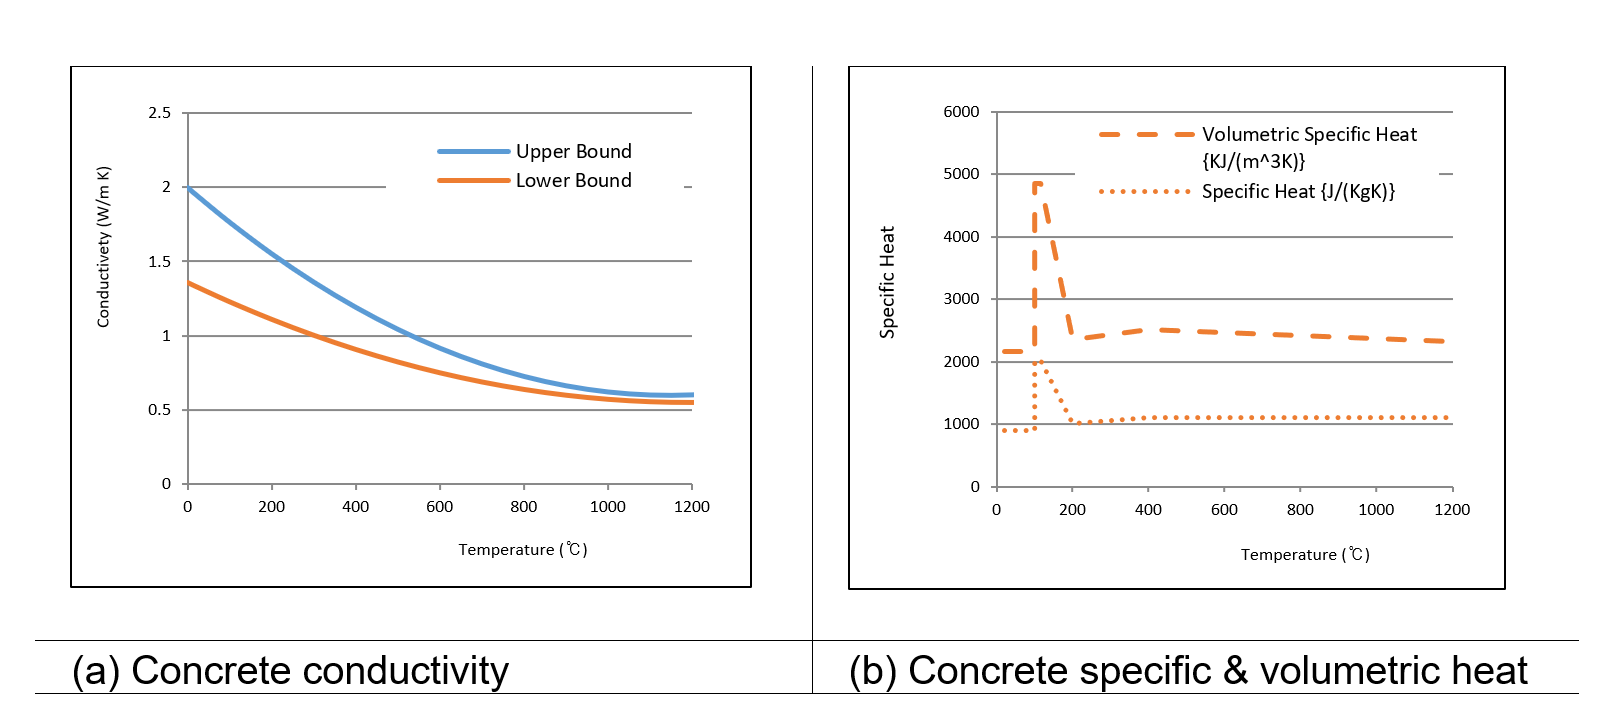 A graph of concrete conductivity and concrete specific and volumetric heat